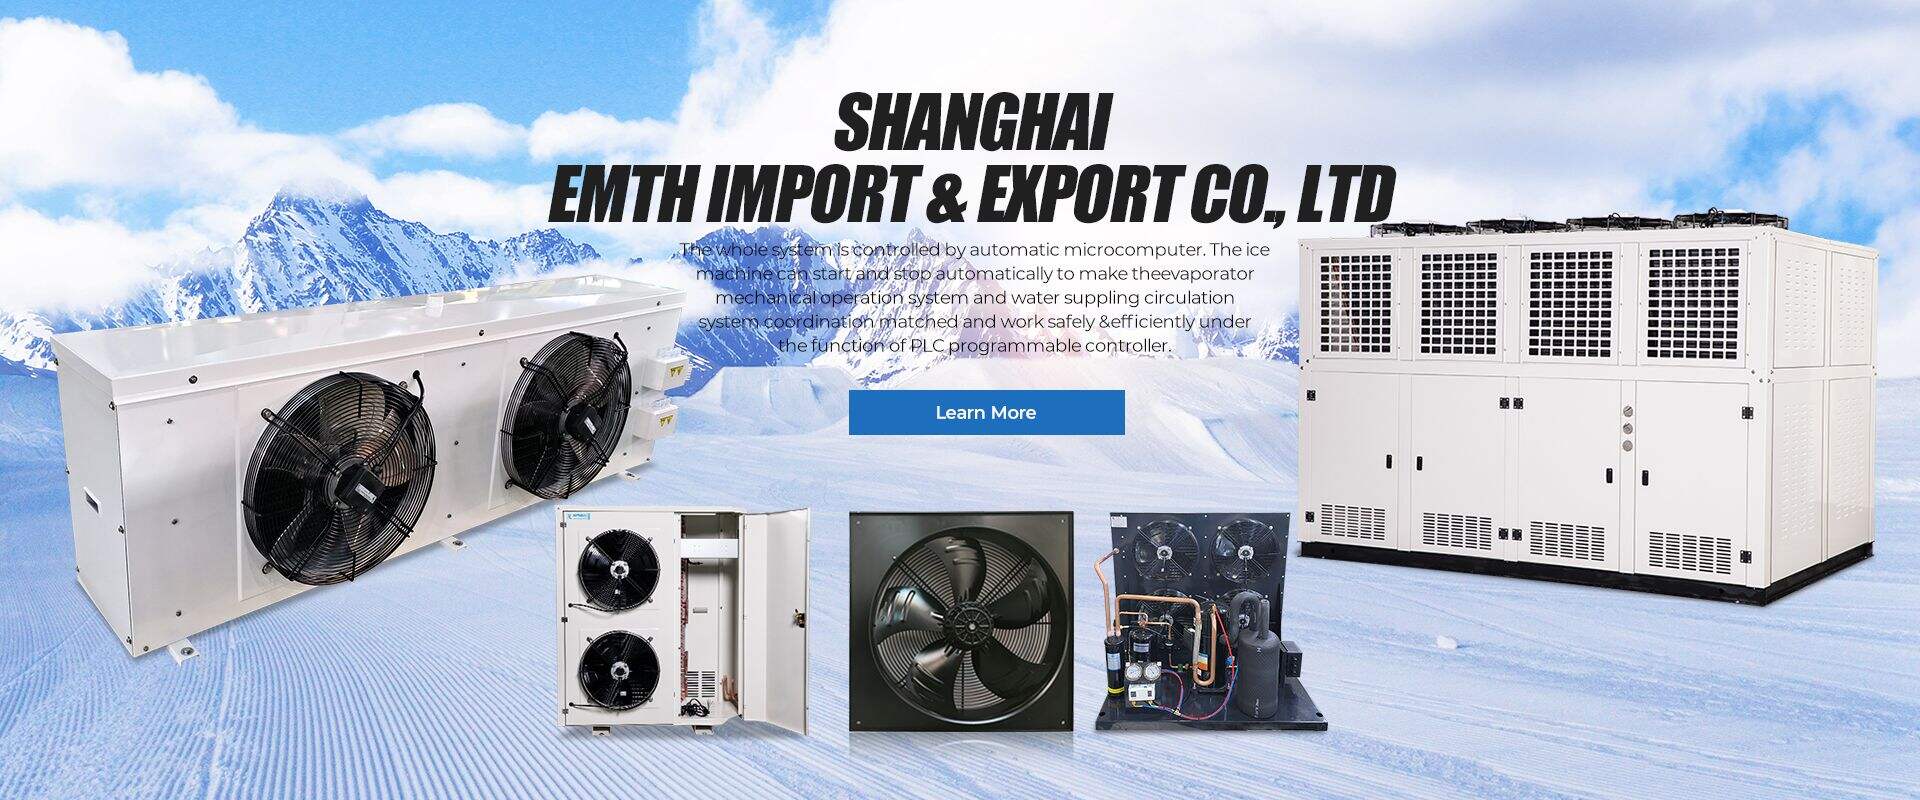 Szanghaj EMTH Import & Export Co, LTD